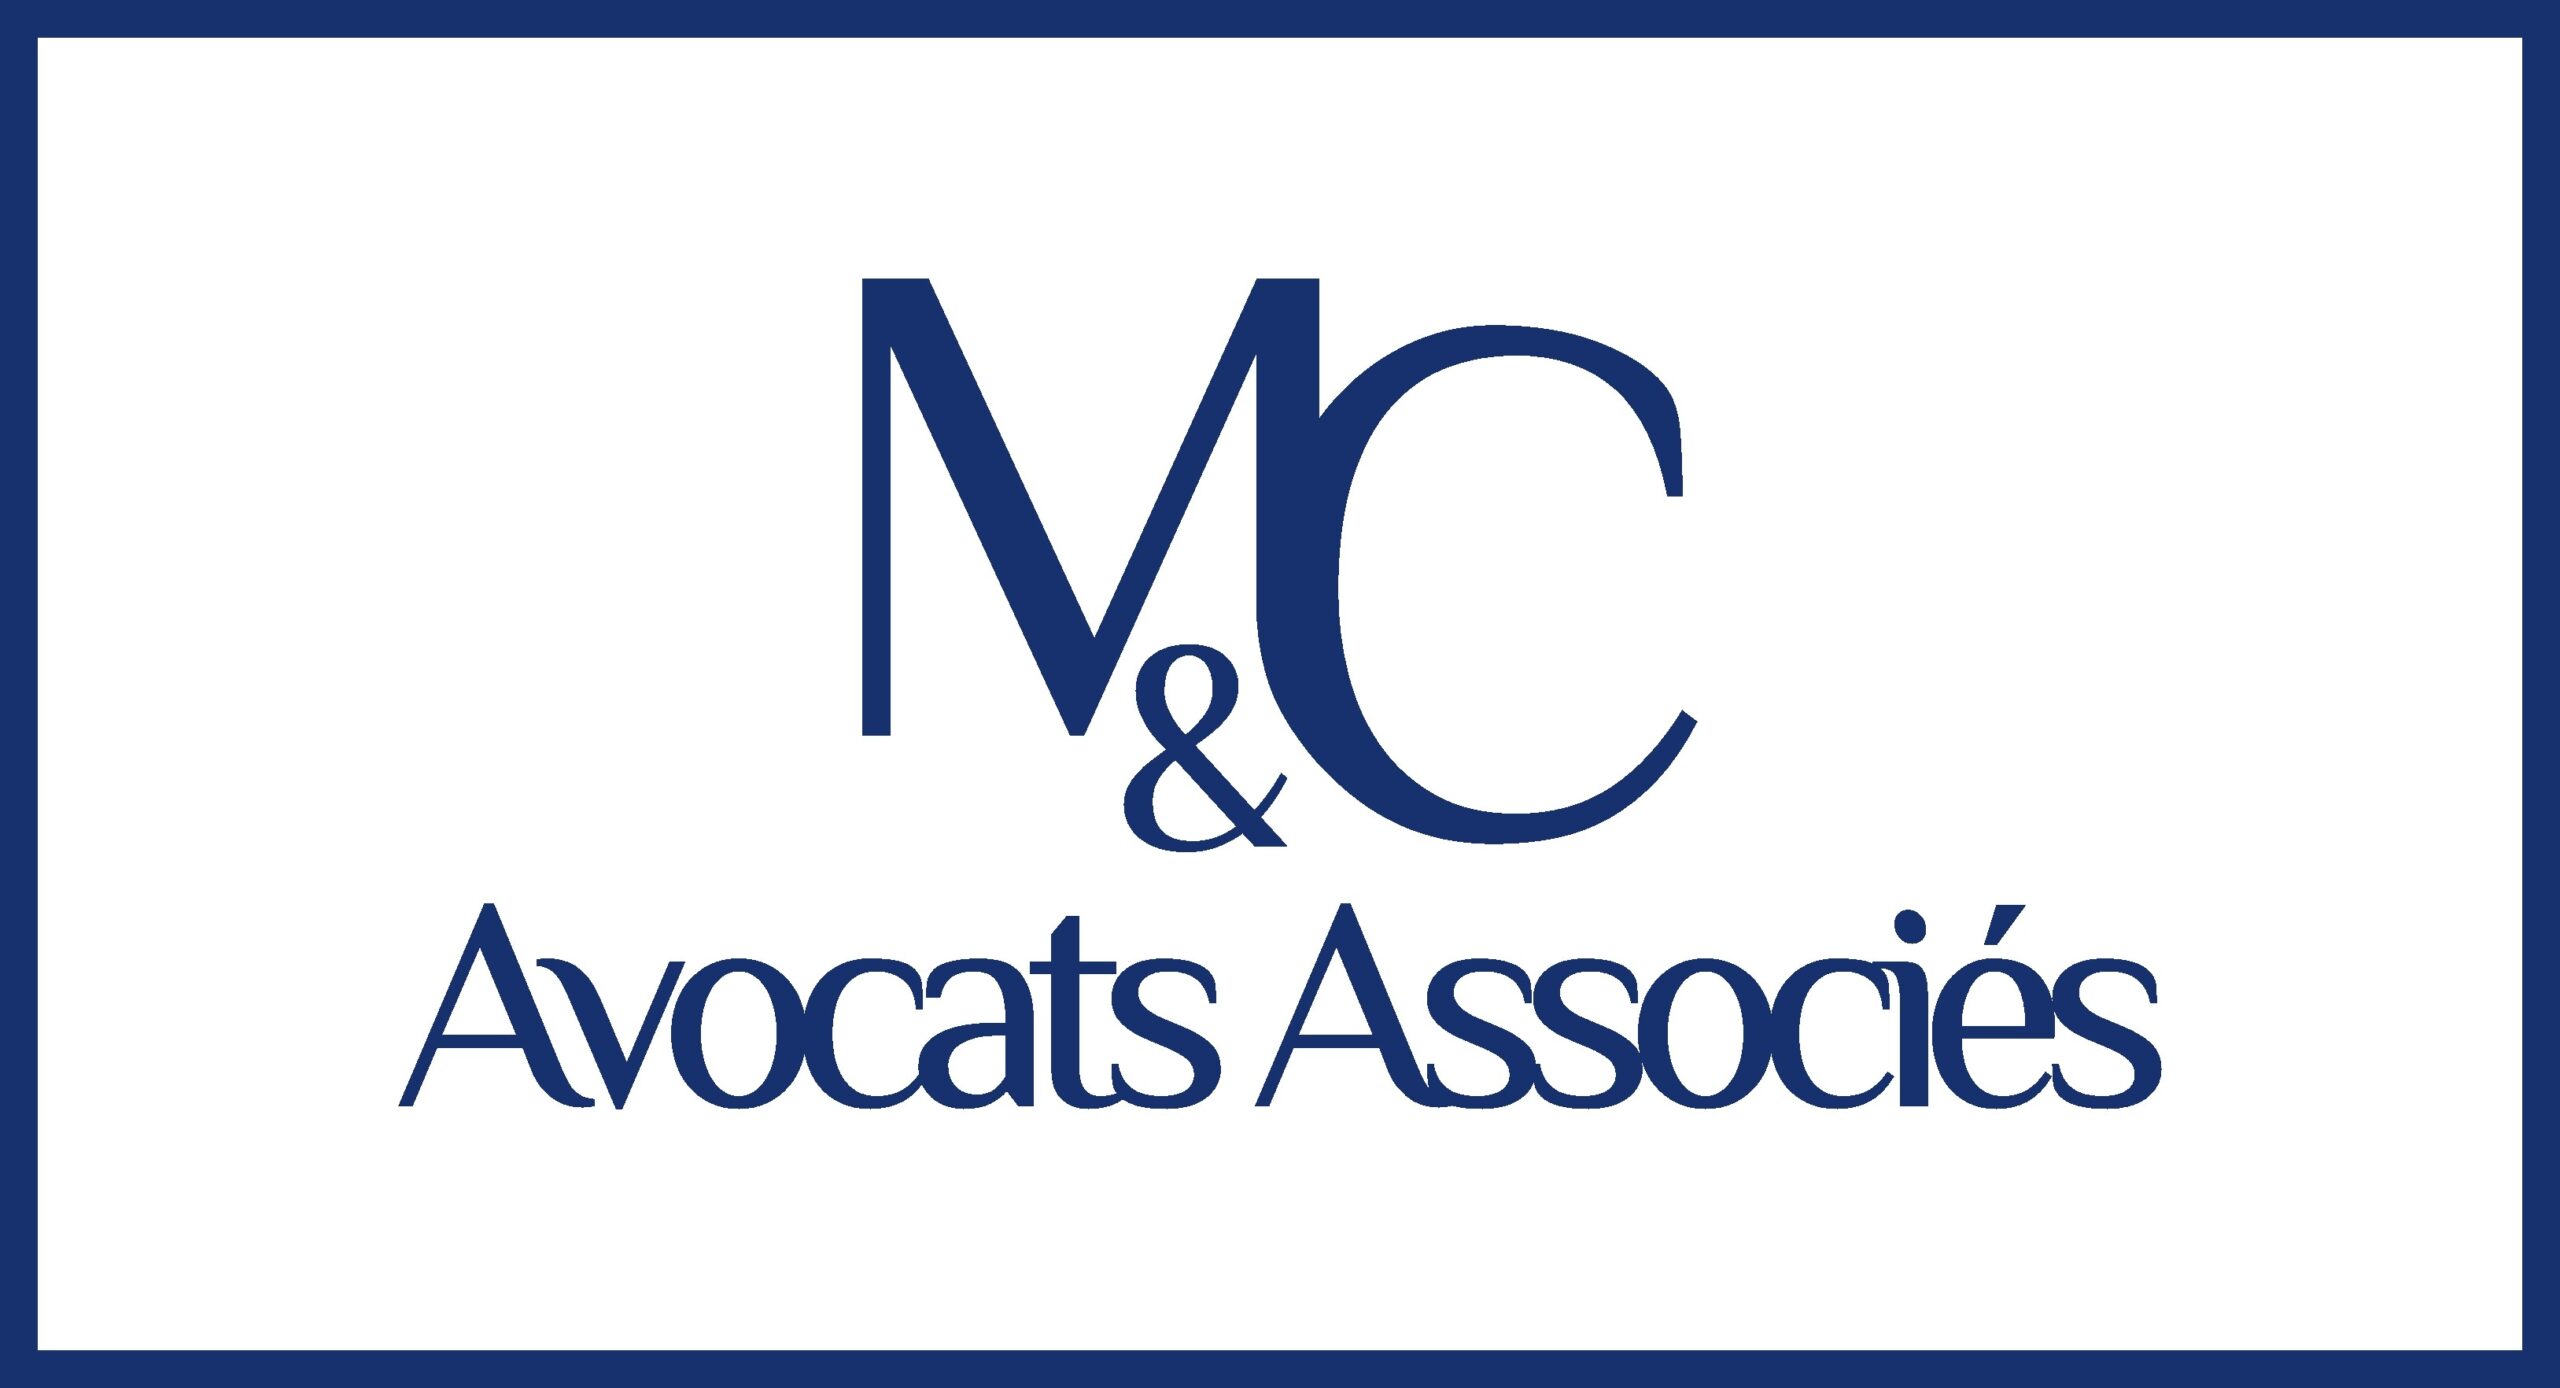 M&C Avocats Associés